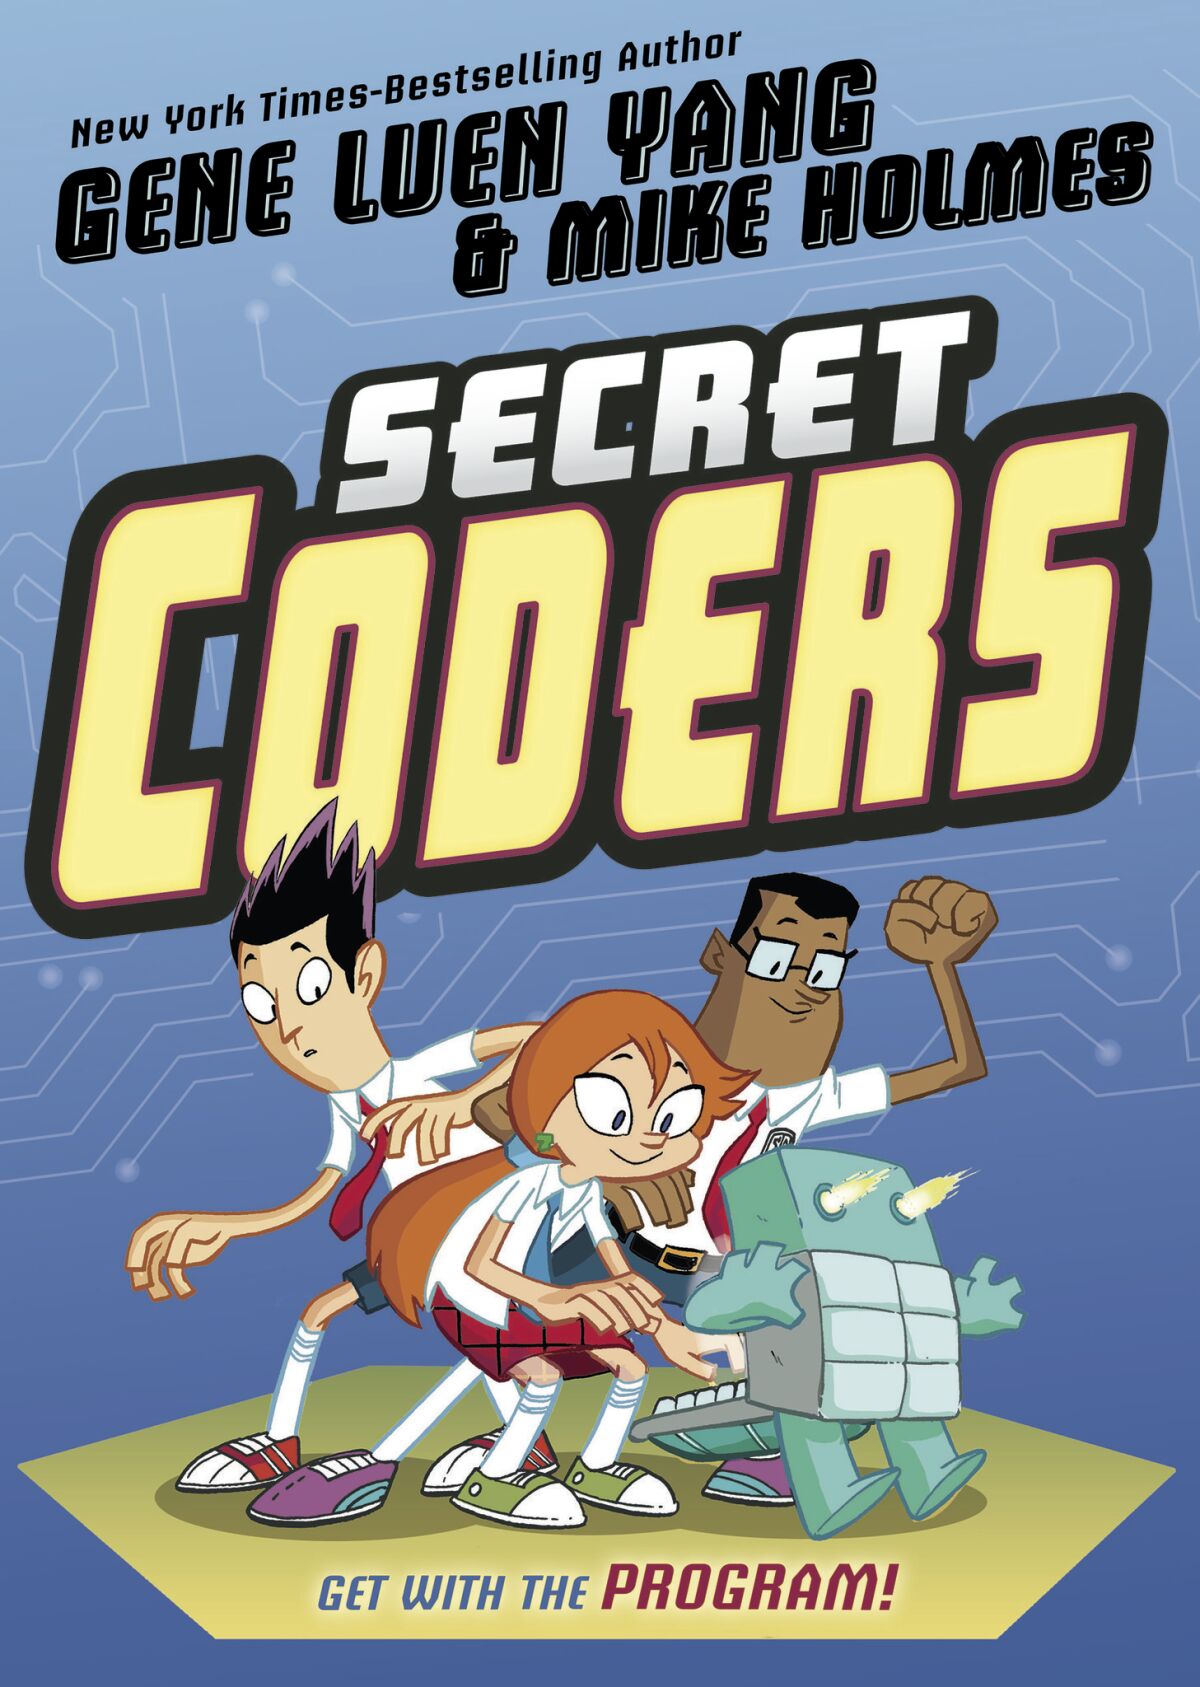 "Secret Coders" by Gene Luen Yang and Mike Holmes